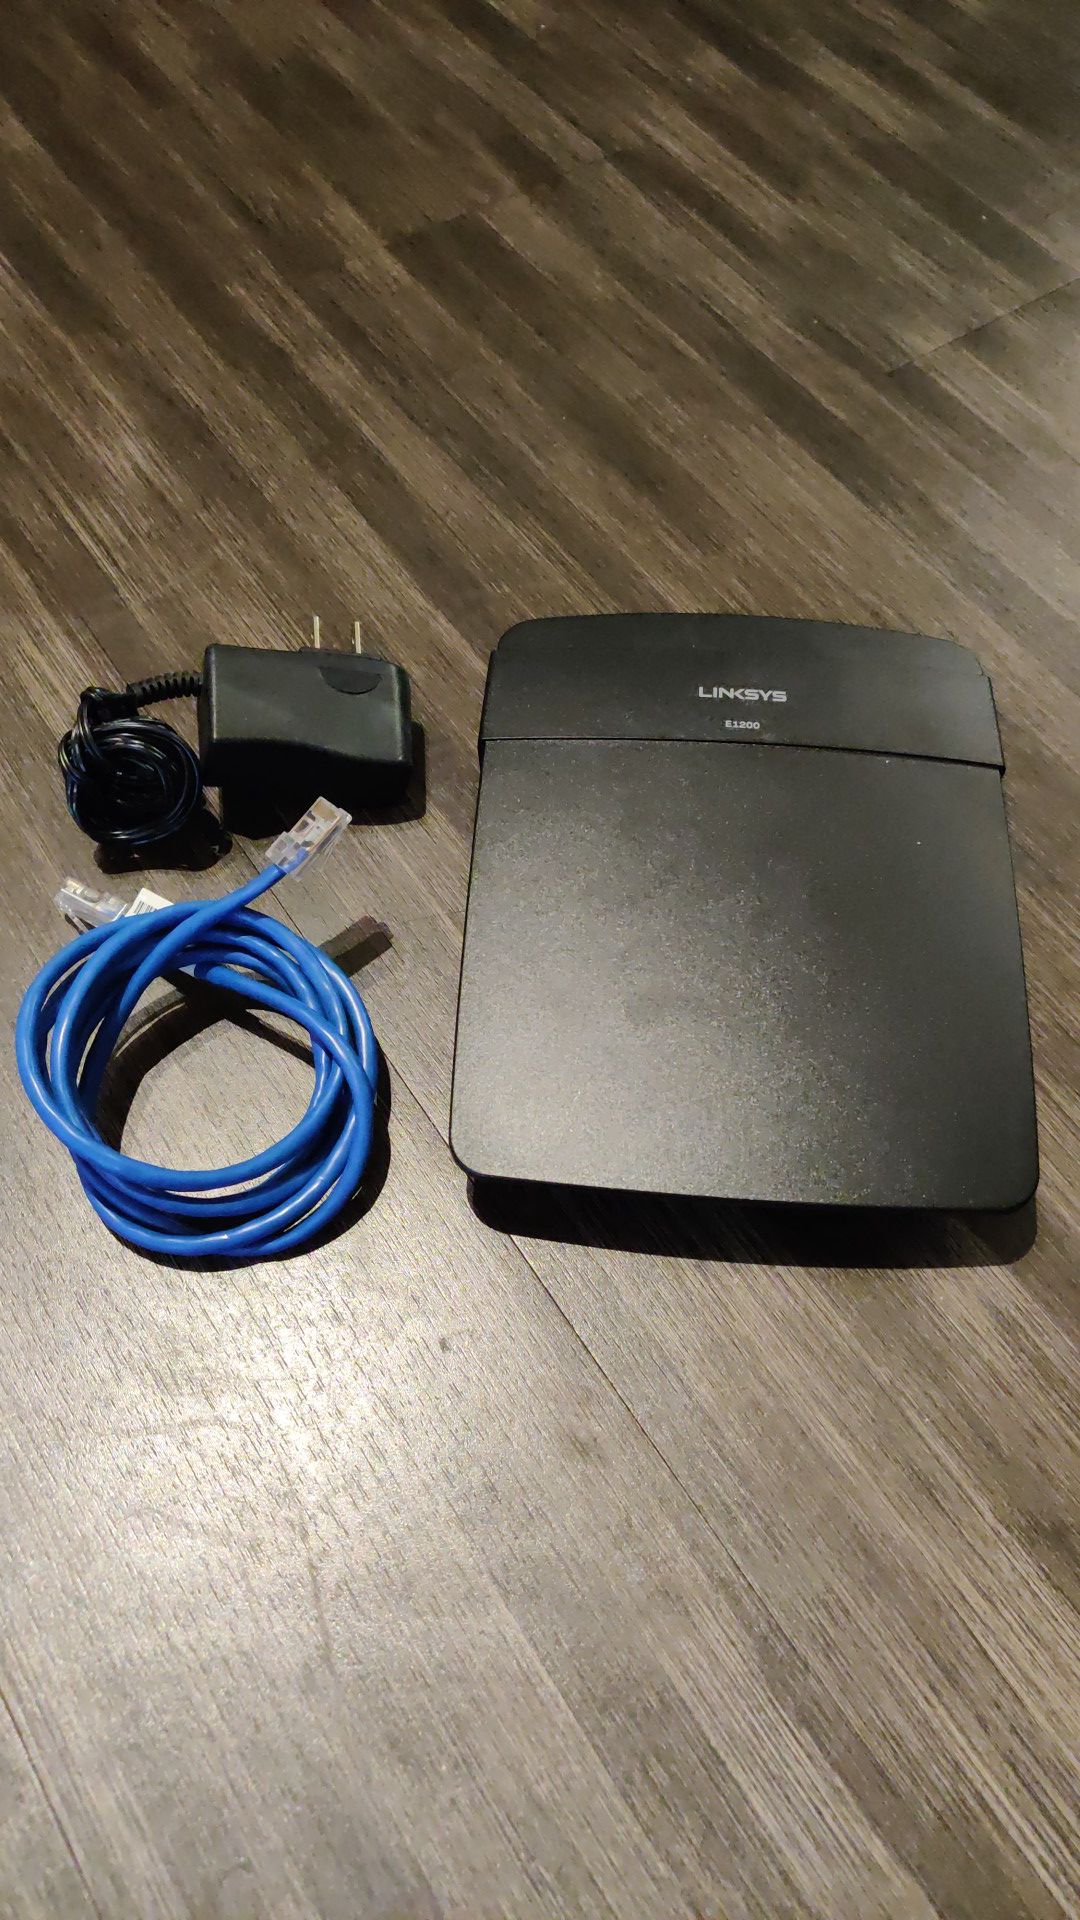 $5 - Linksys E1200 Wifi Router